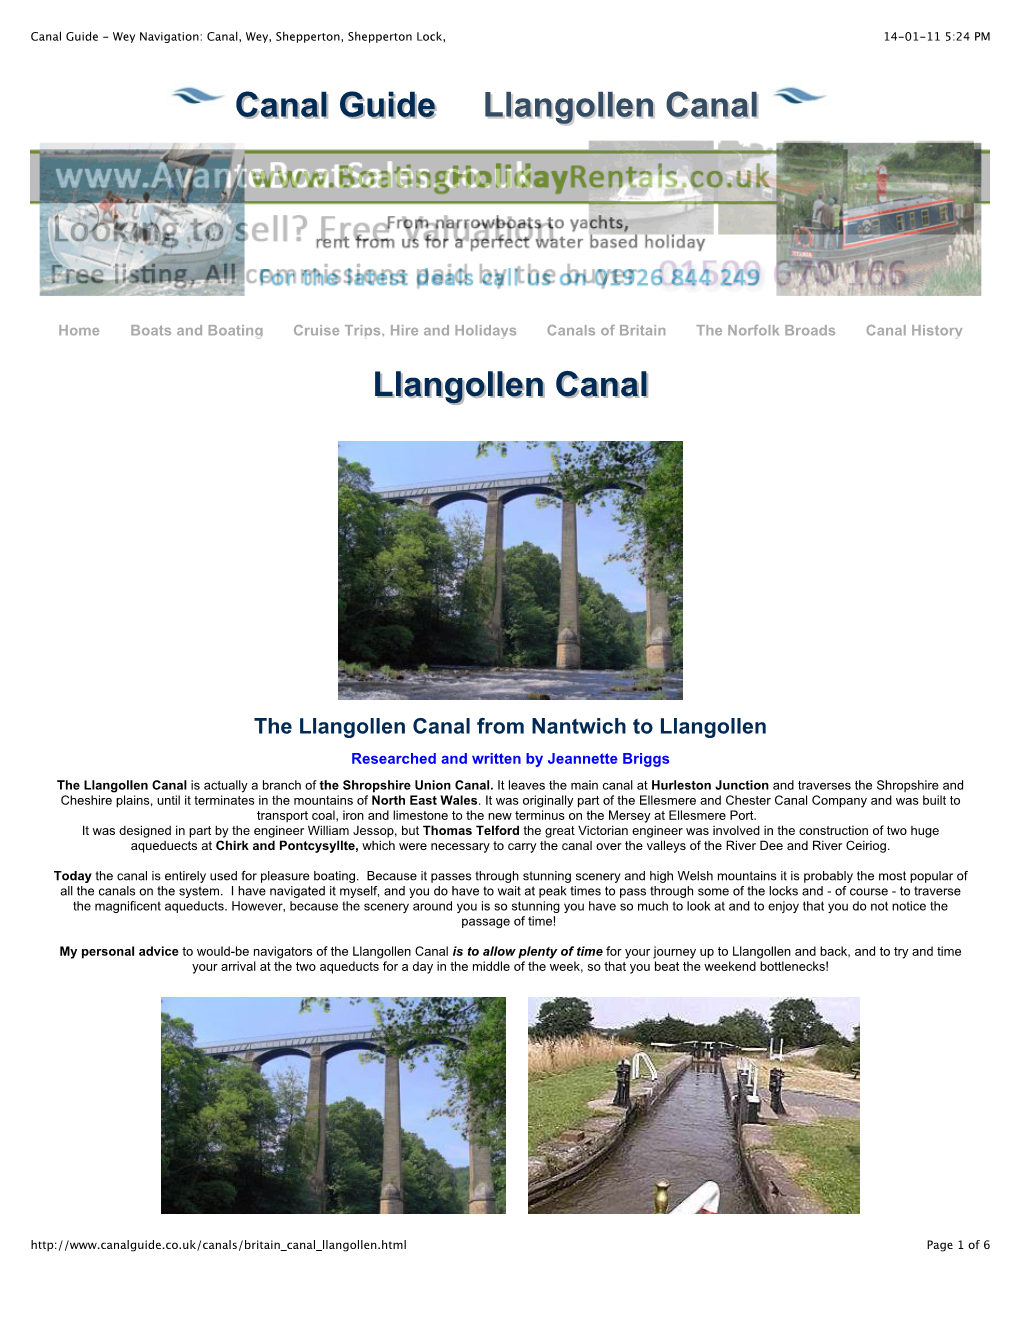 Canal Guide-Wey Navigation-Shepperton